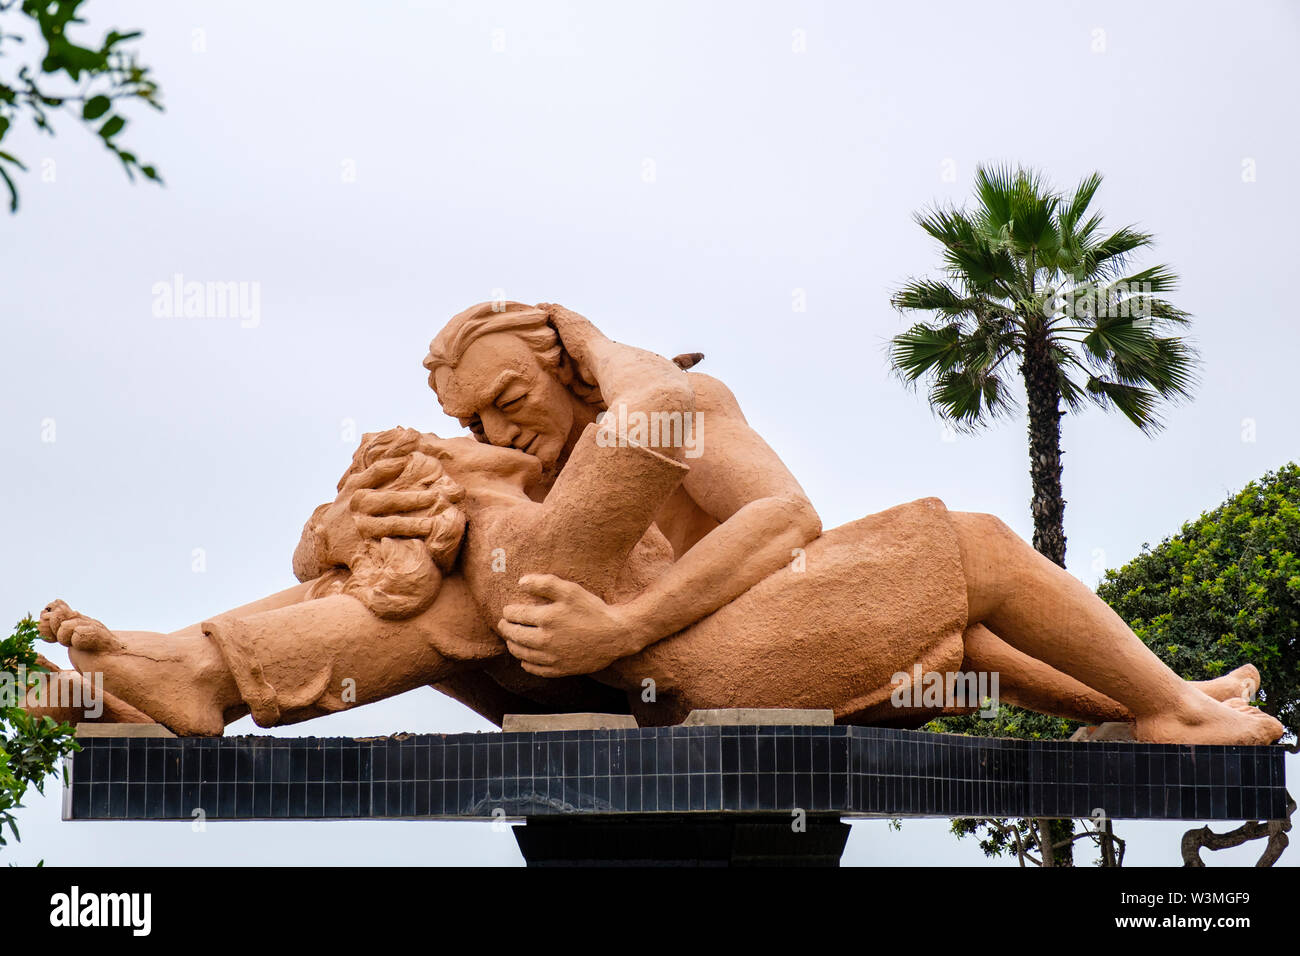 El Beso (The Kiss), Victor Delfin sculpture at Parque del Amor (Love Park), city park in the District of Miraflores, Lima, Peru Stock Photo